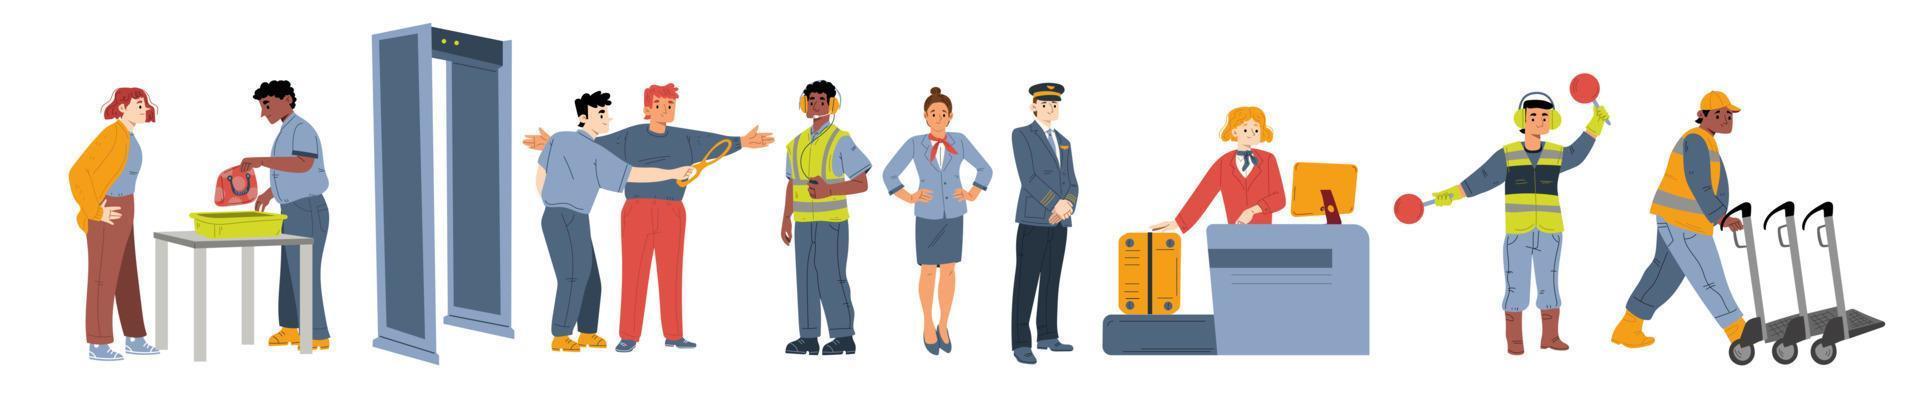 luchthaven personeel, piloot, stewardess, veiligheid arbeiders vector